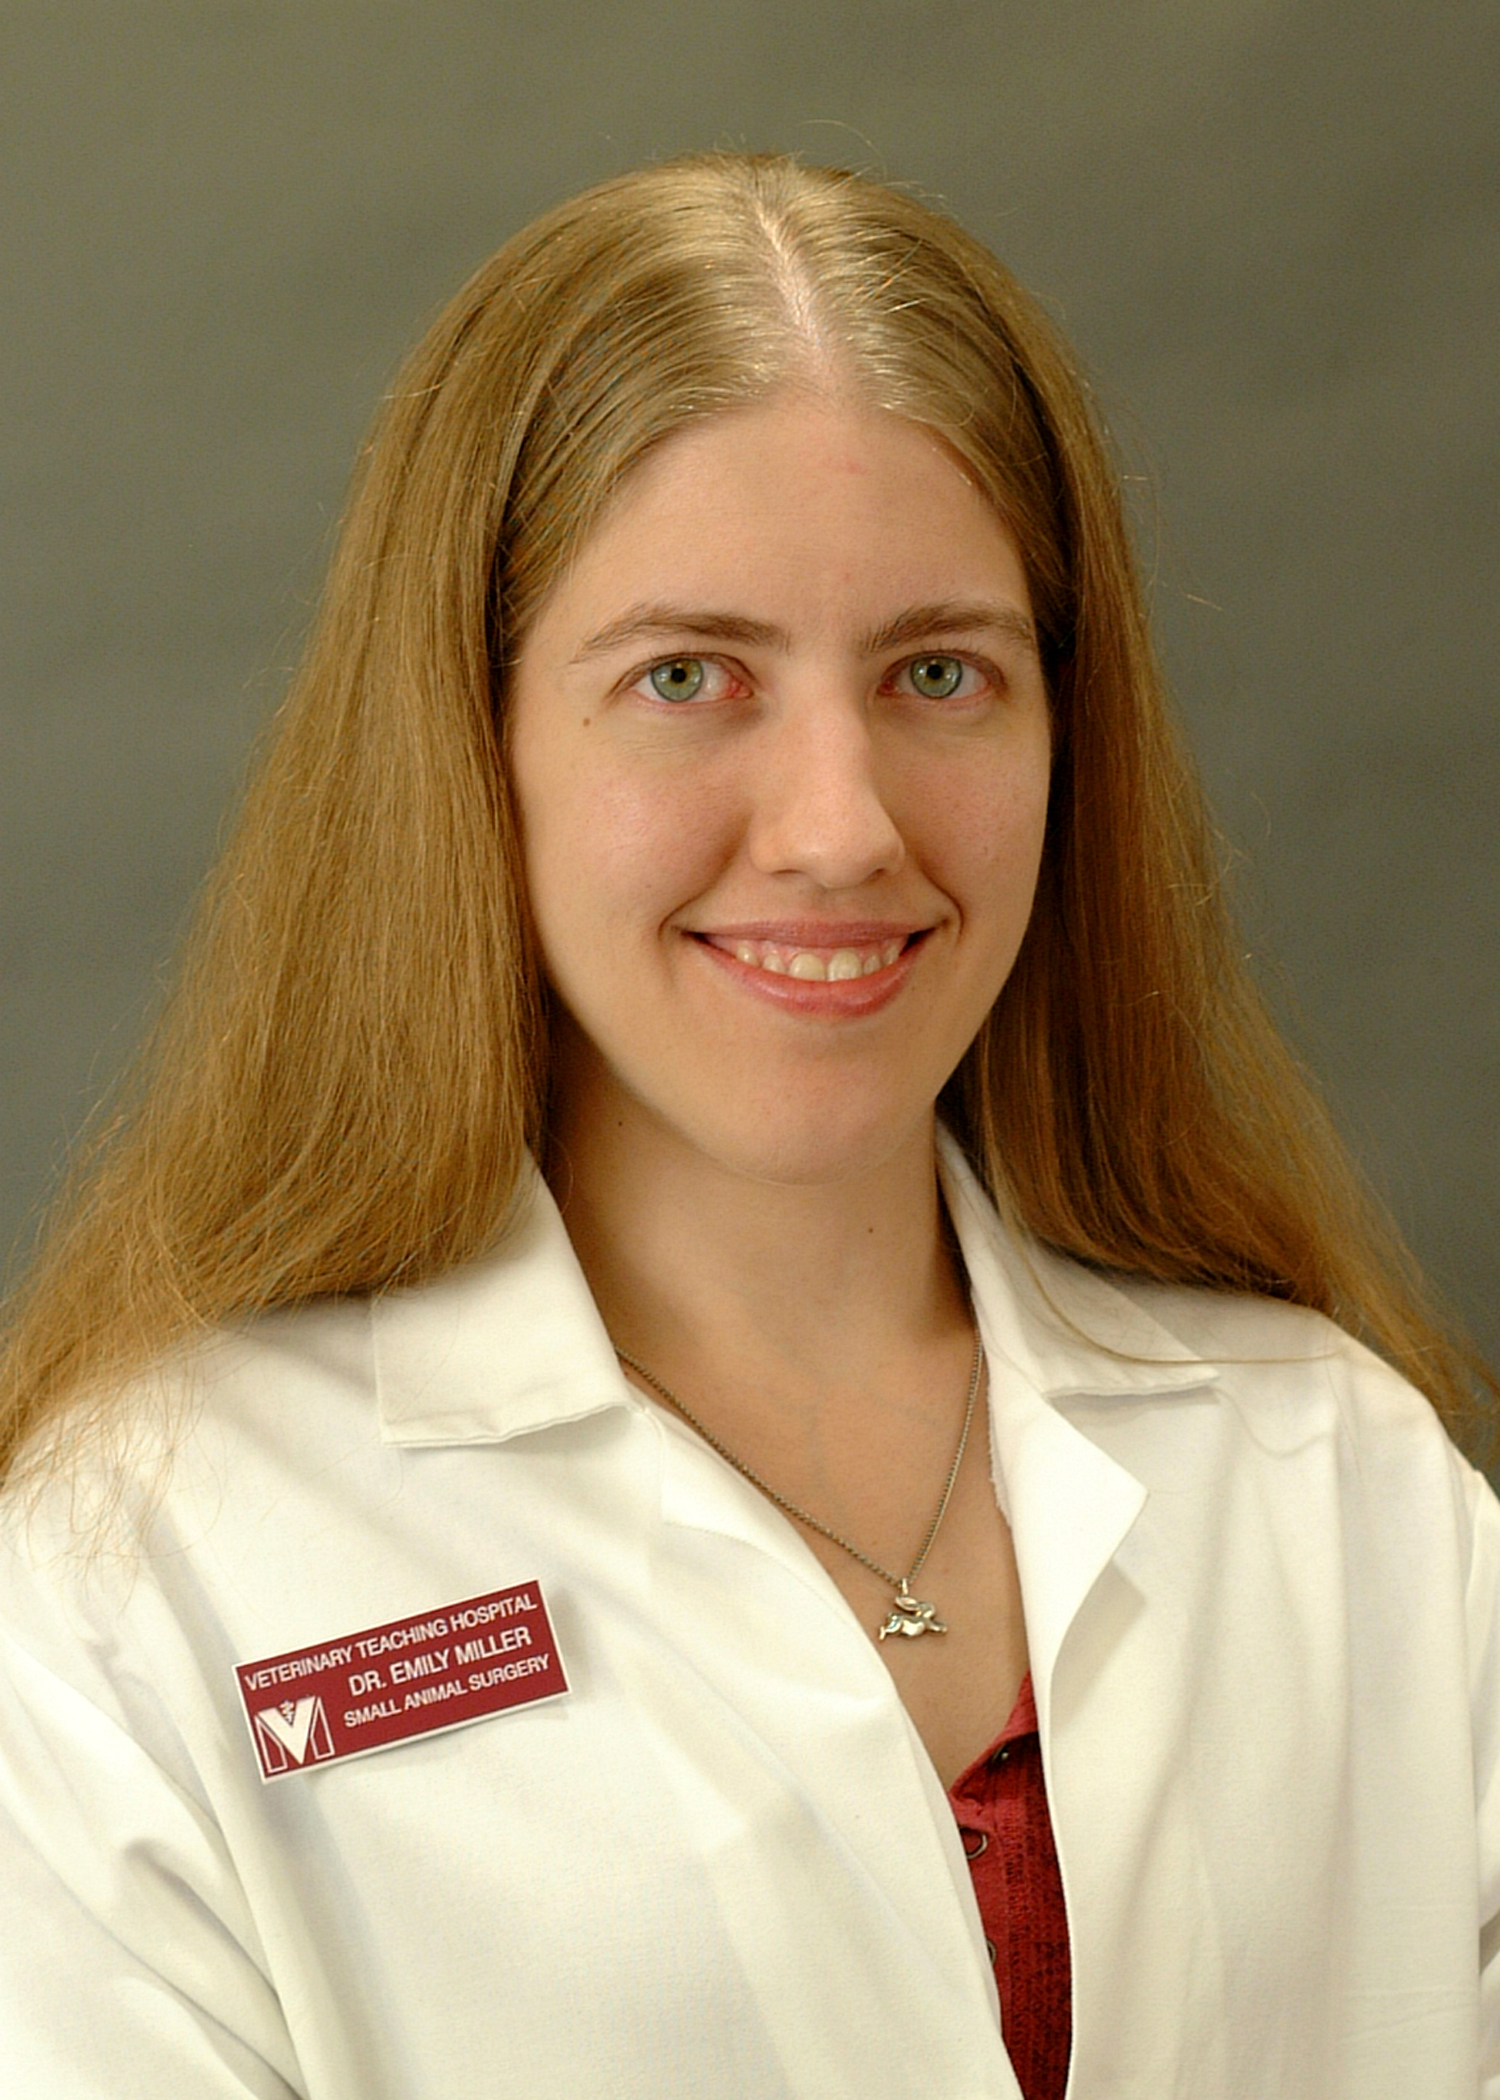 Dr. Emily Miller